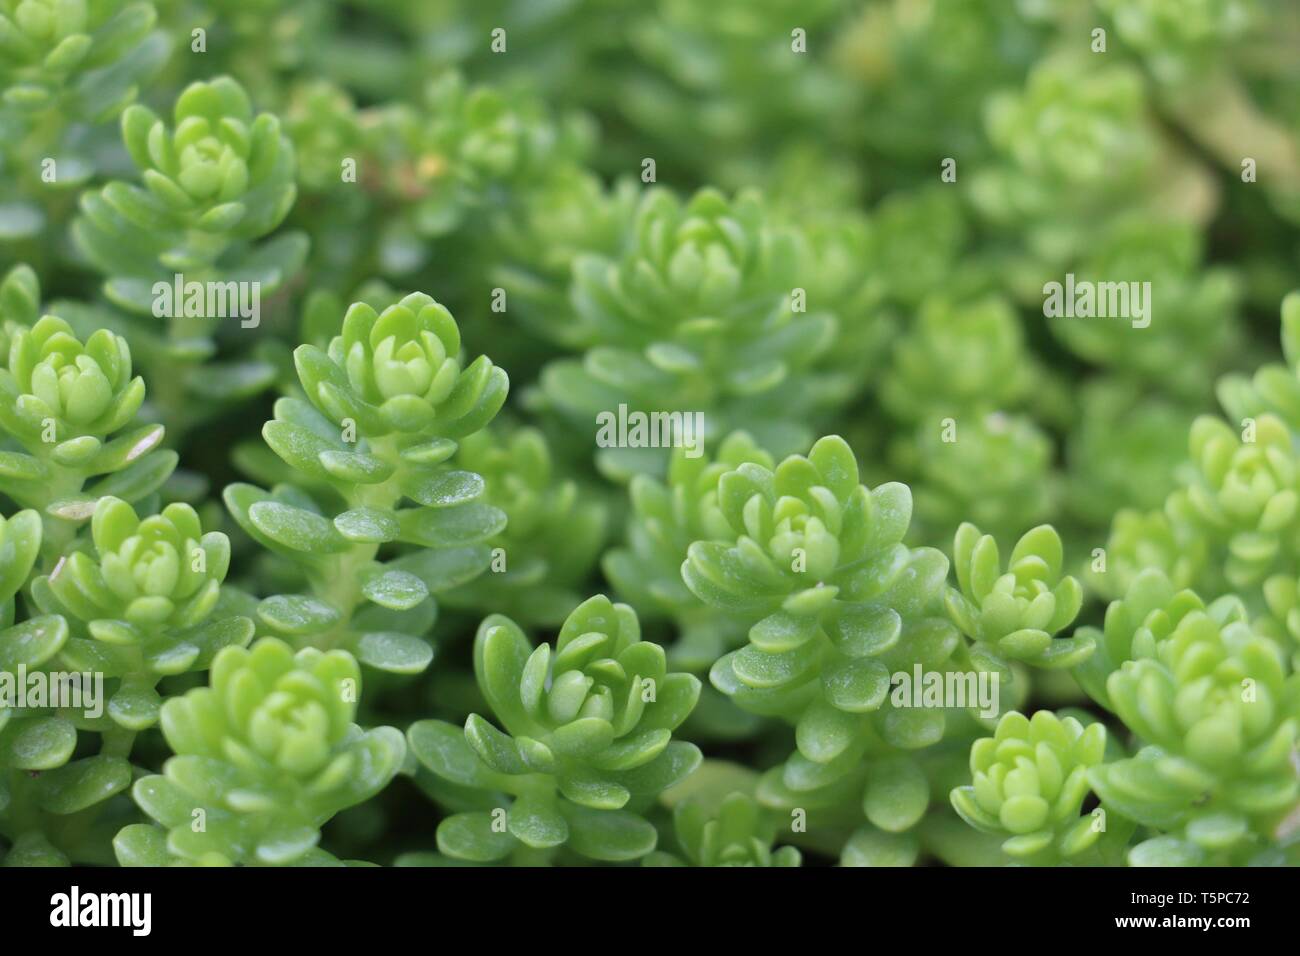 South of France, Occitania - Succulent plant - Echeveria elegans Stock Photo